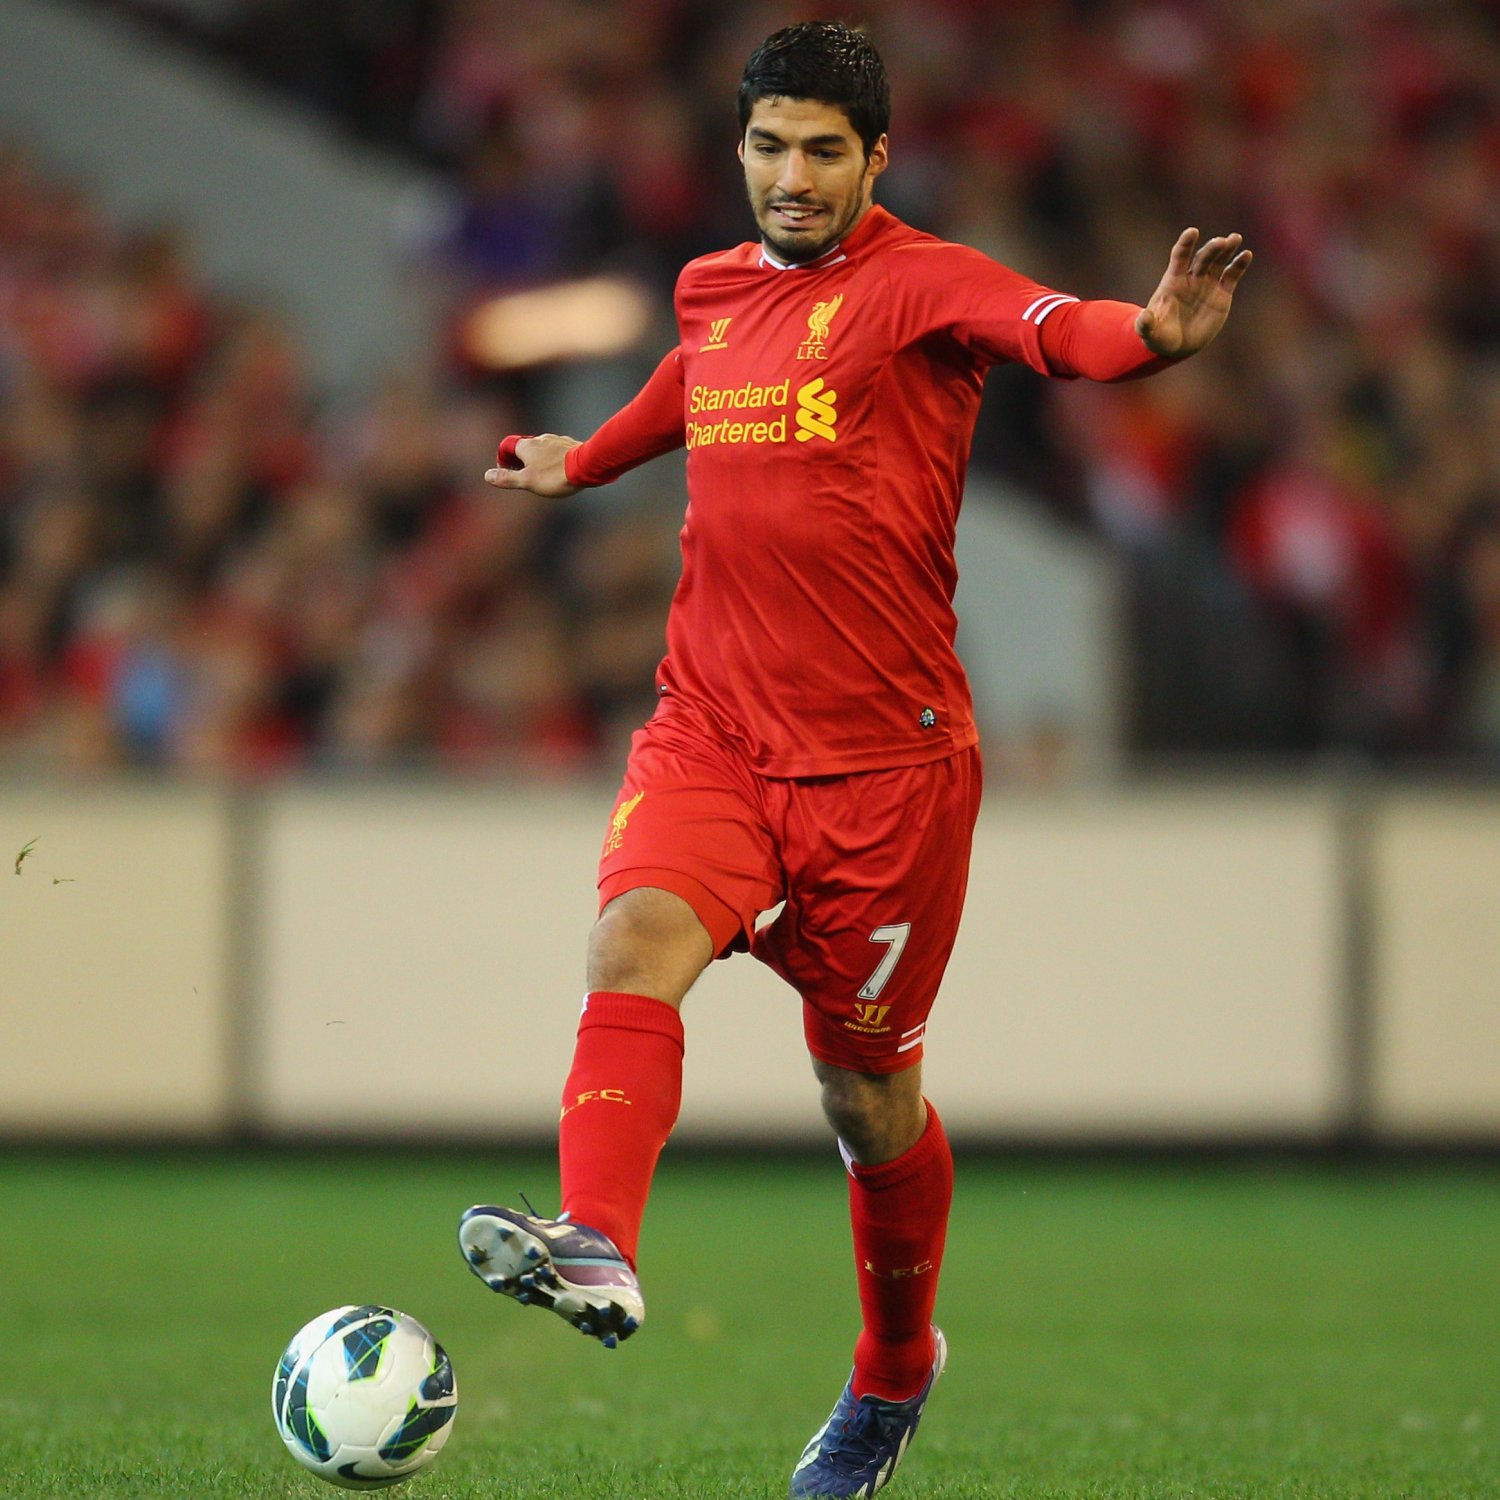 Liverpool Transfer News: Breaking Down Latest on Reds Star Luis Suarez | Bleacher Report